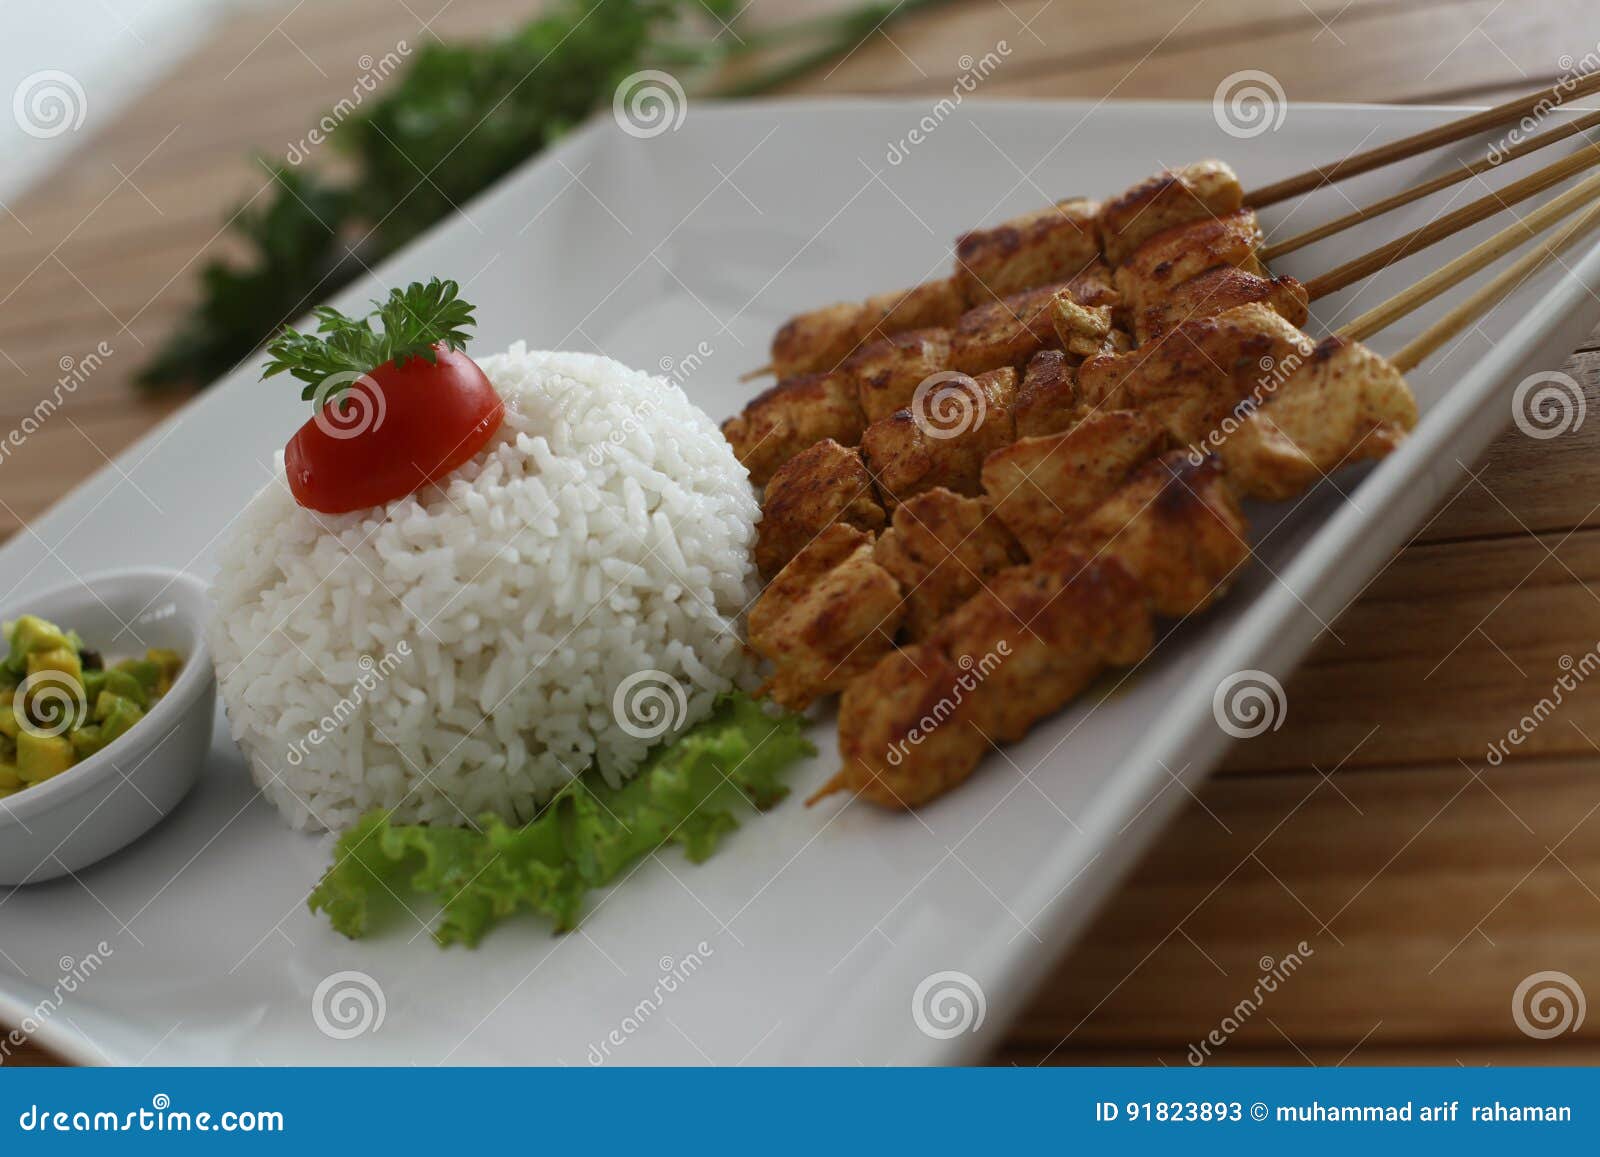 satay rice chicken grill